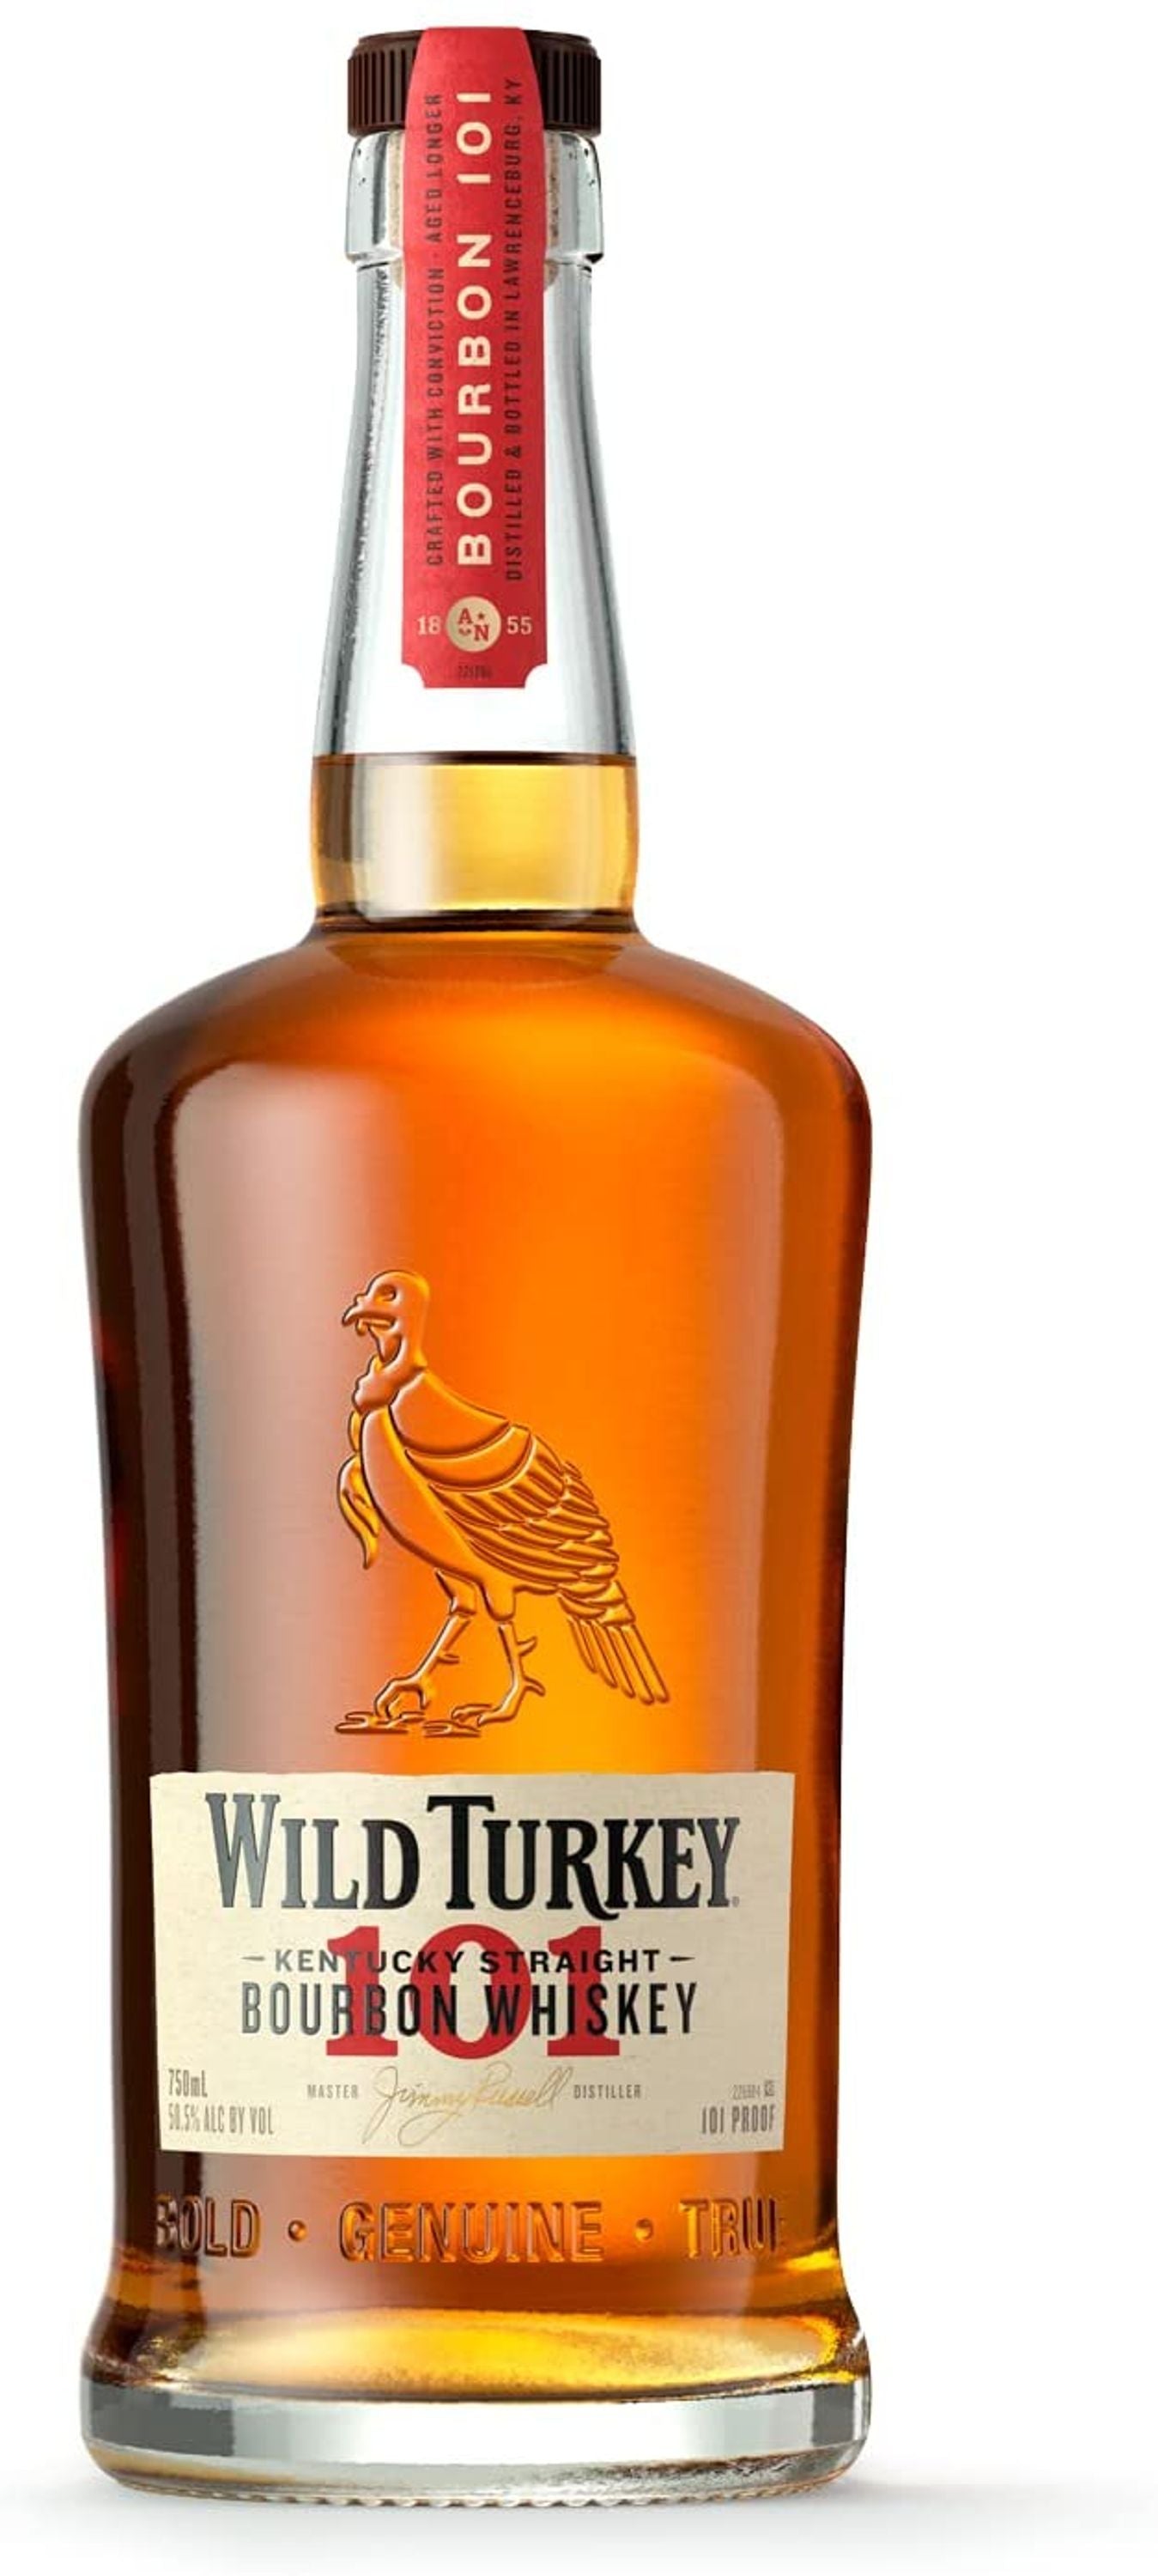 Wild Turkey 101 Proof Kentucky Straight Bourbon Whiskey 0.7l, alc. 50.5% by volume